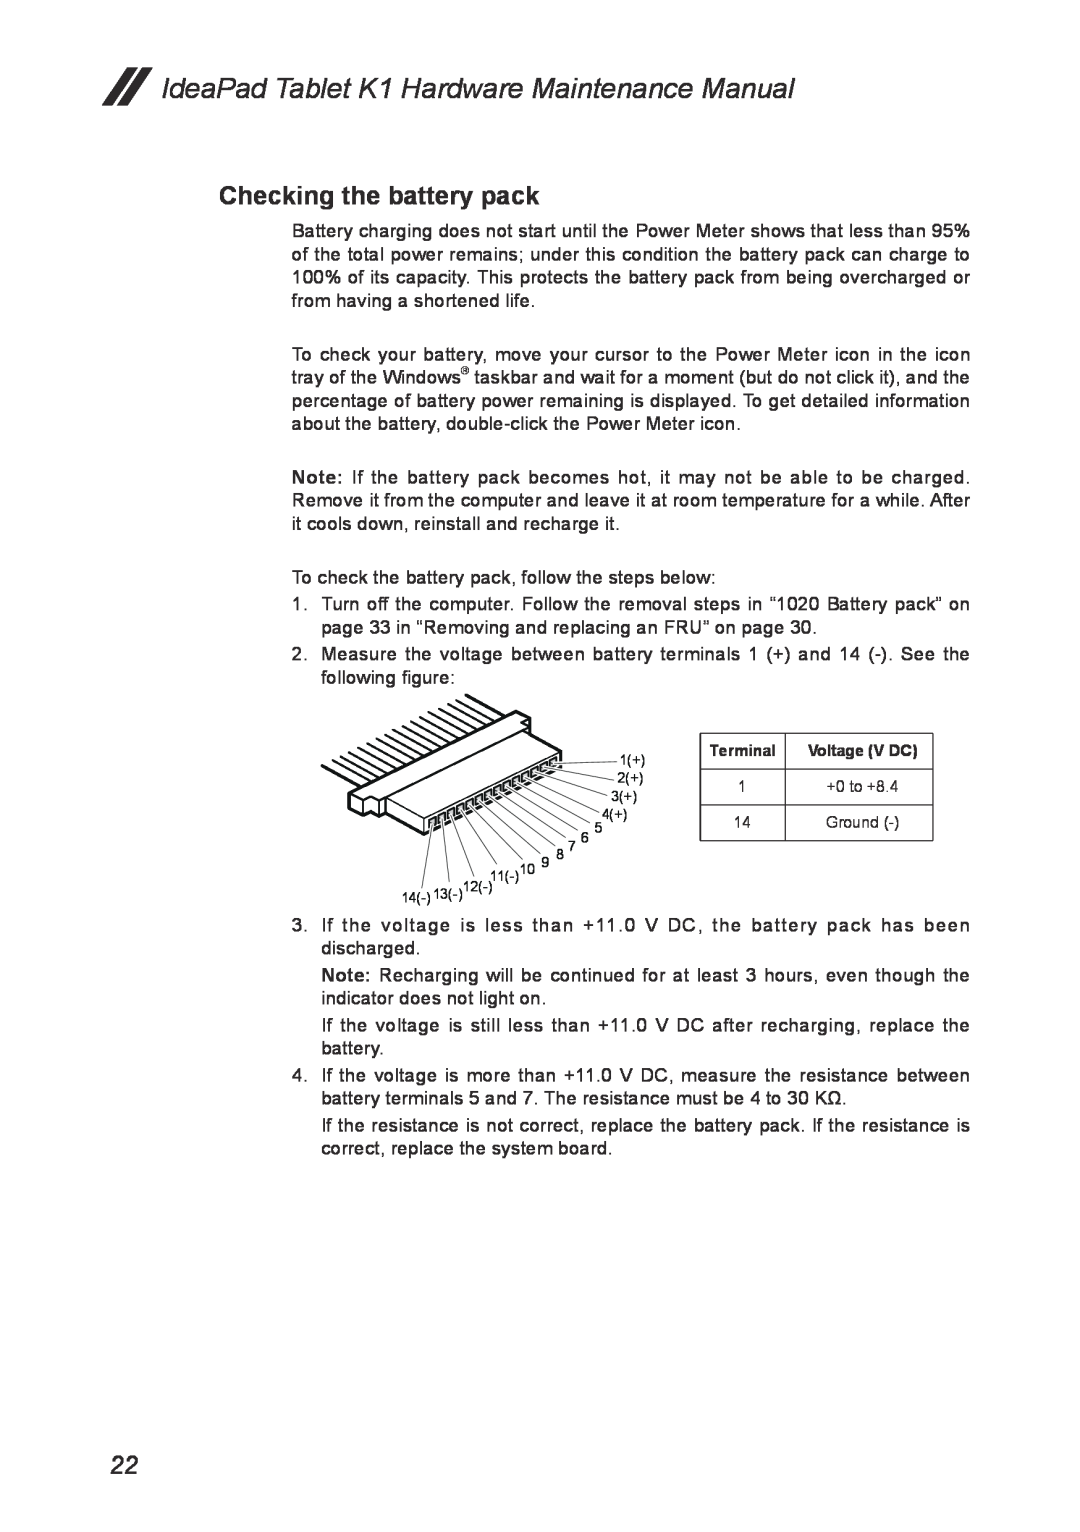 Lenovo T20x2-1, 1304XF8 manual Checking the battery pack, IdeaPad Tablet K1 Hardware Maintenance Manual 